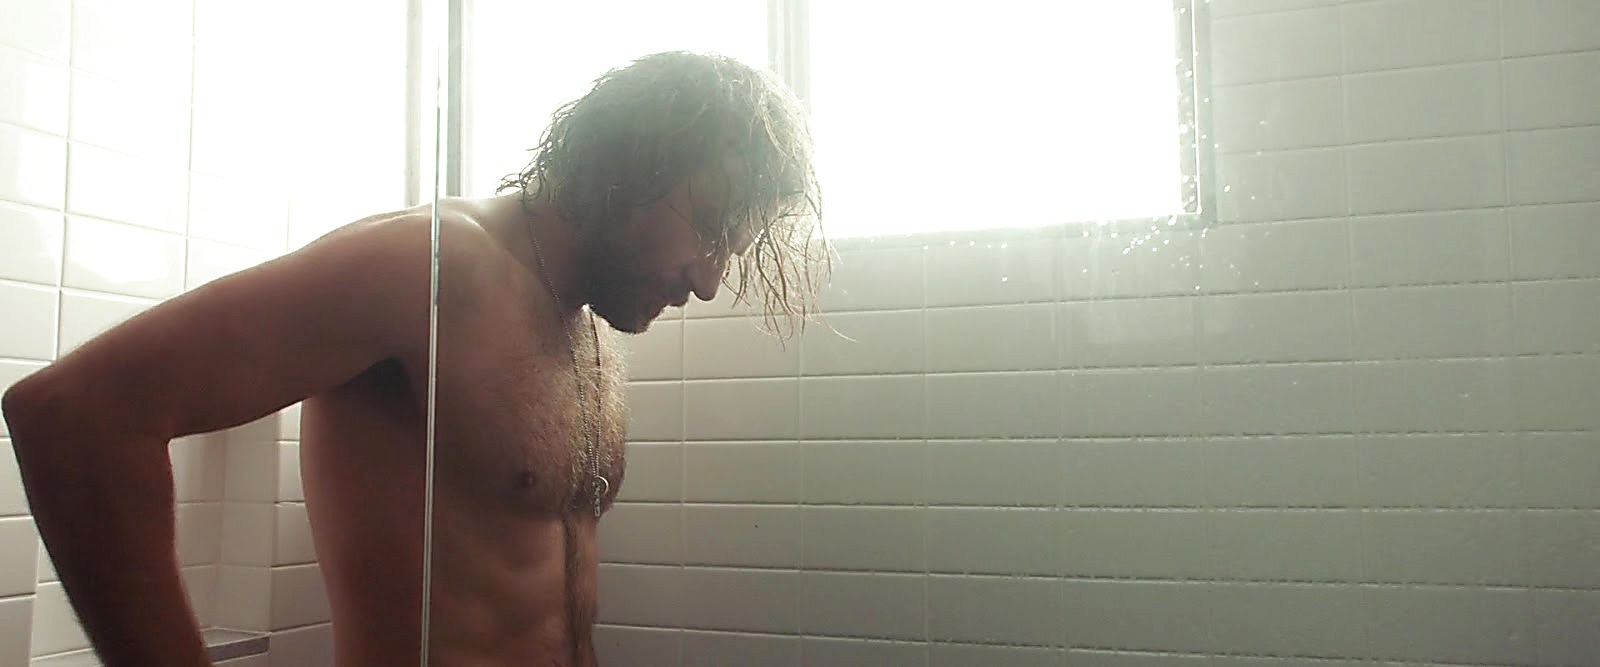 Bradley Cooper sexy shirtless scene January 16, 2019, 5am